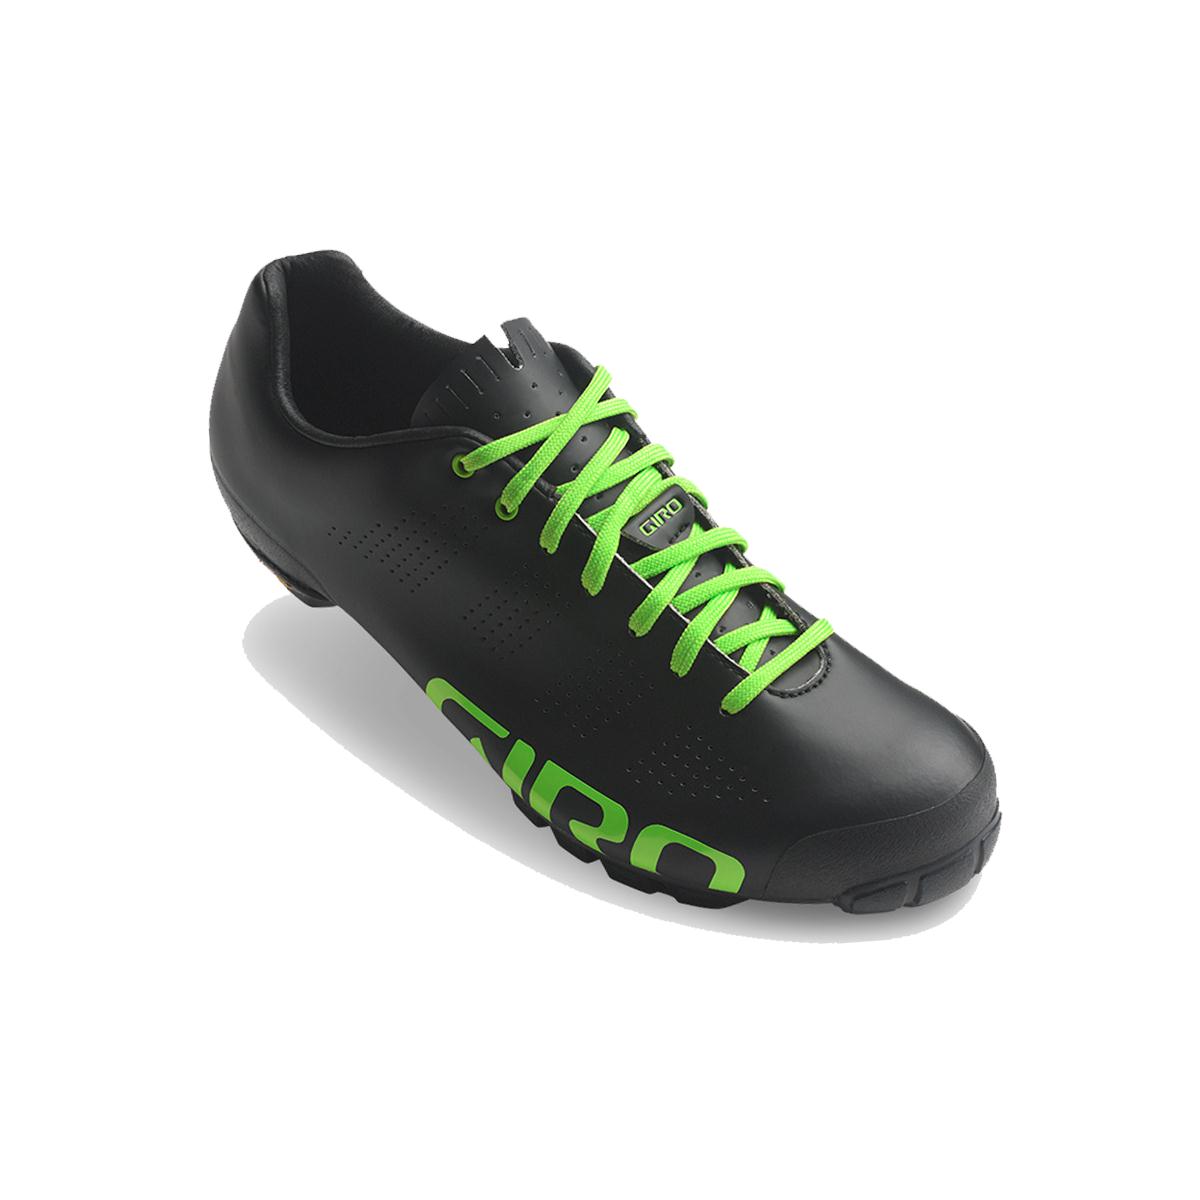 GIRO Empire VR90 MTB Cycling Shoes 2018 Black/Lime 44